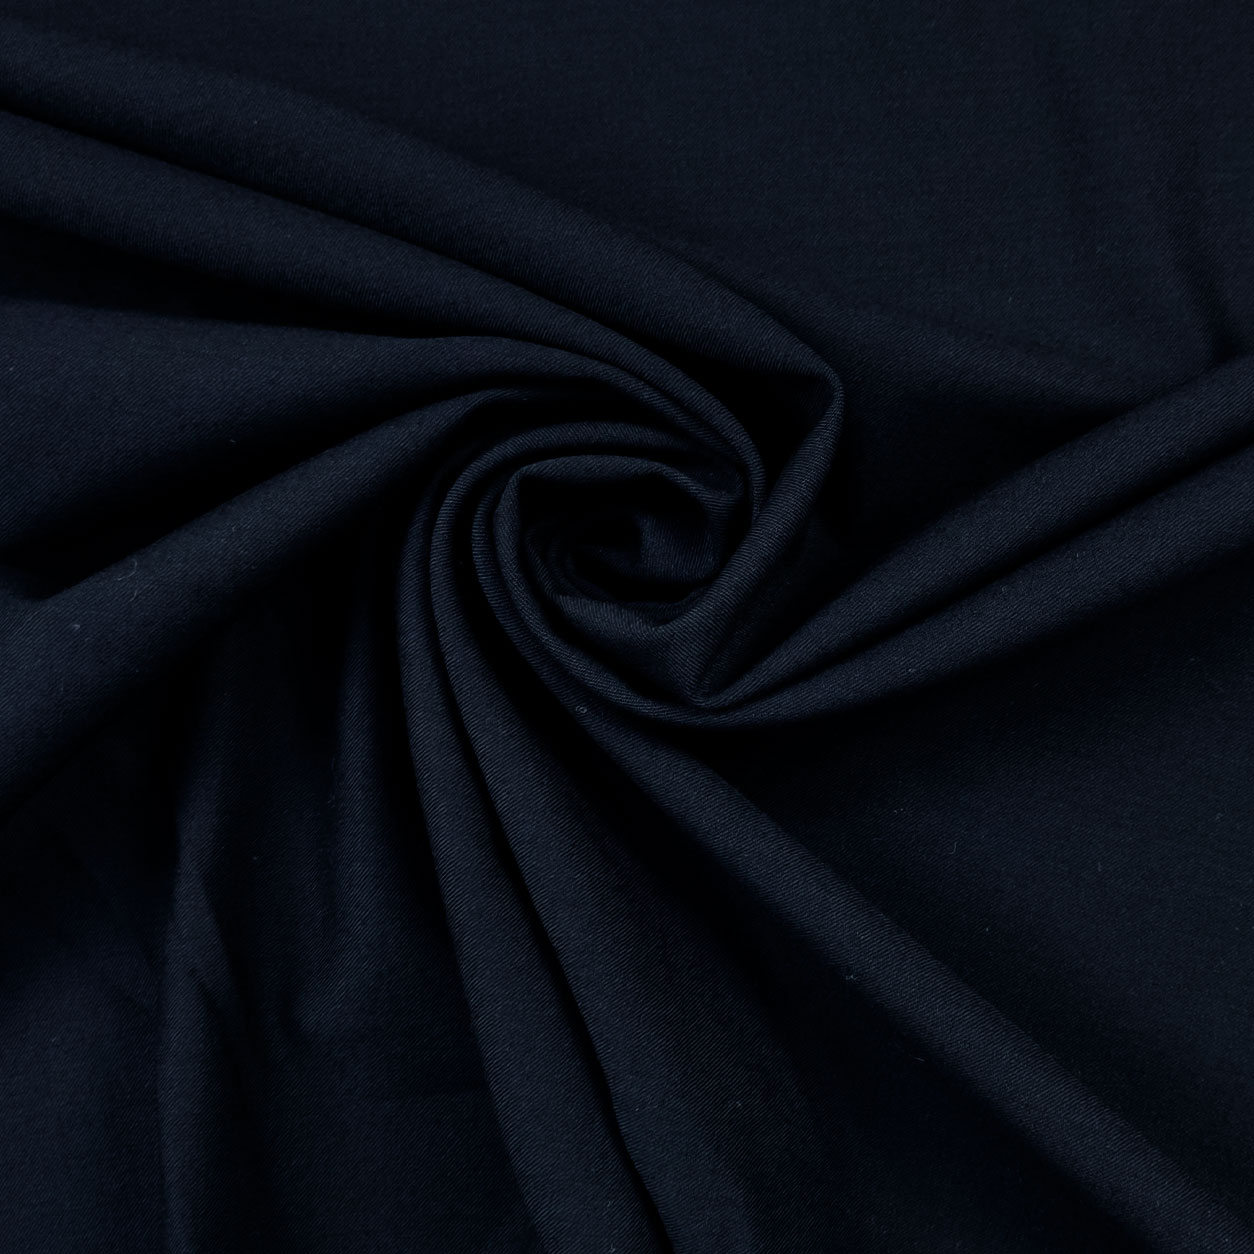 tessuto-elastico-blu-notte